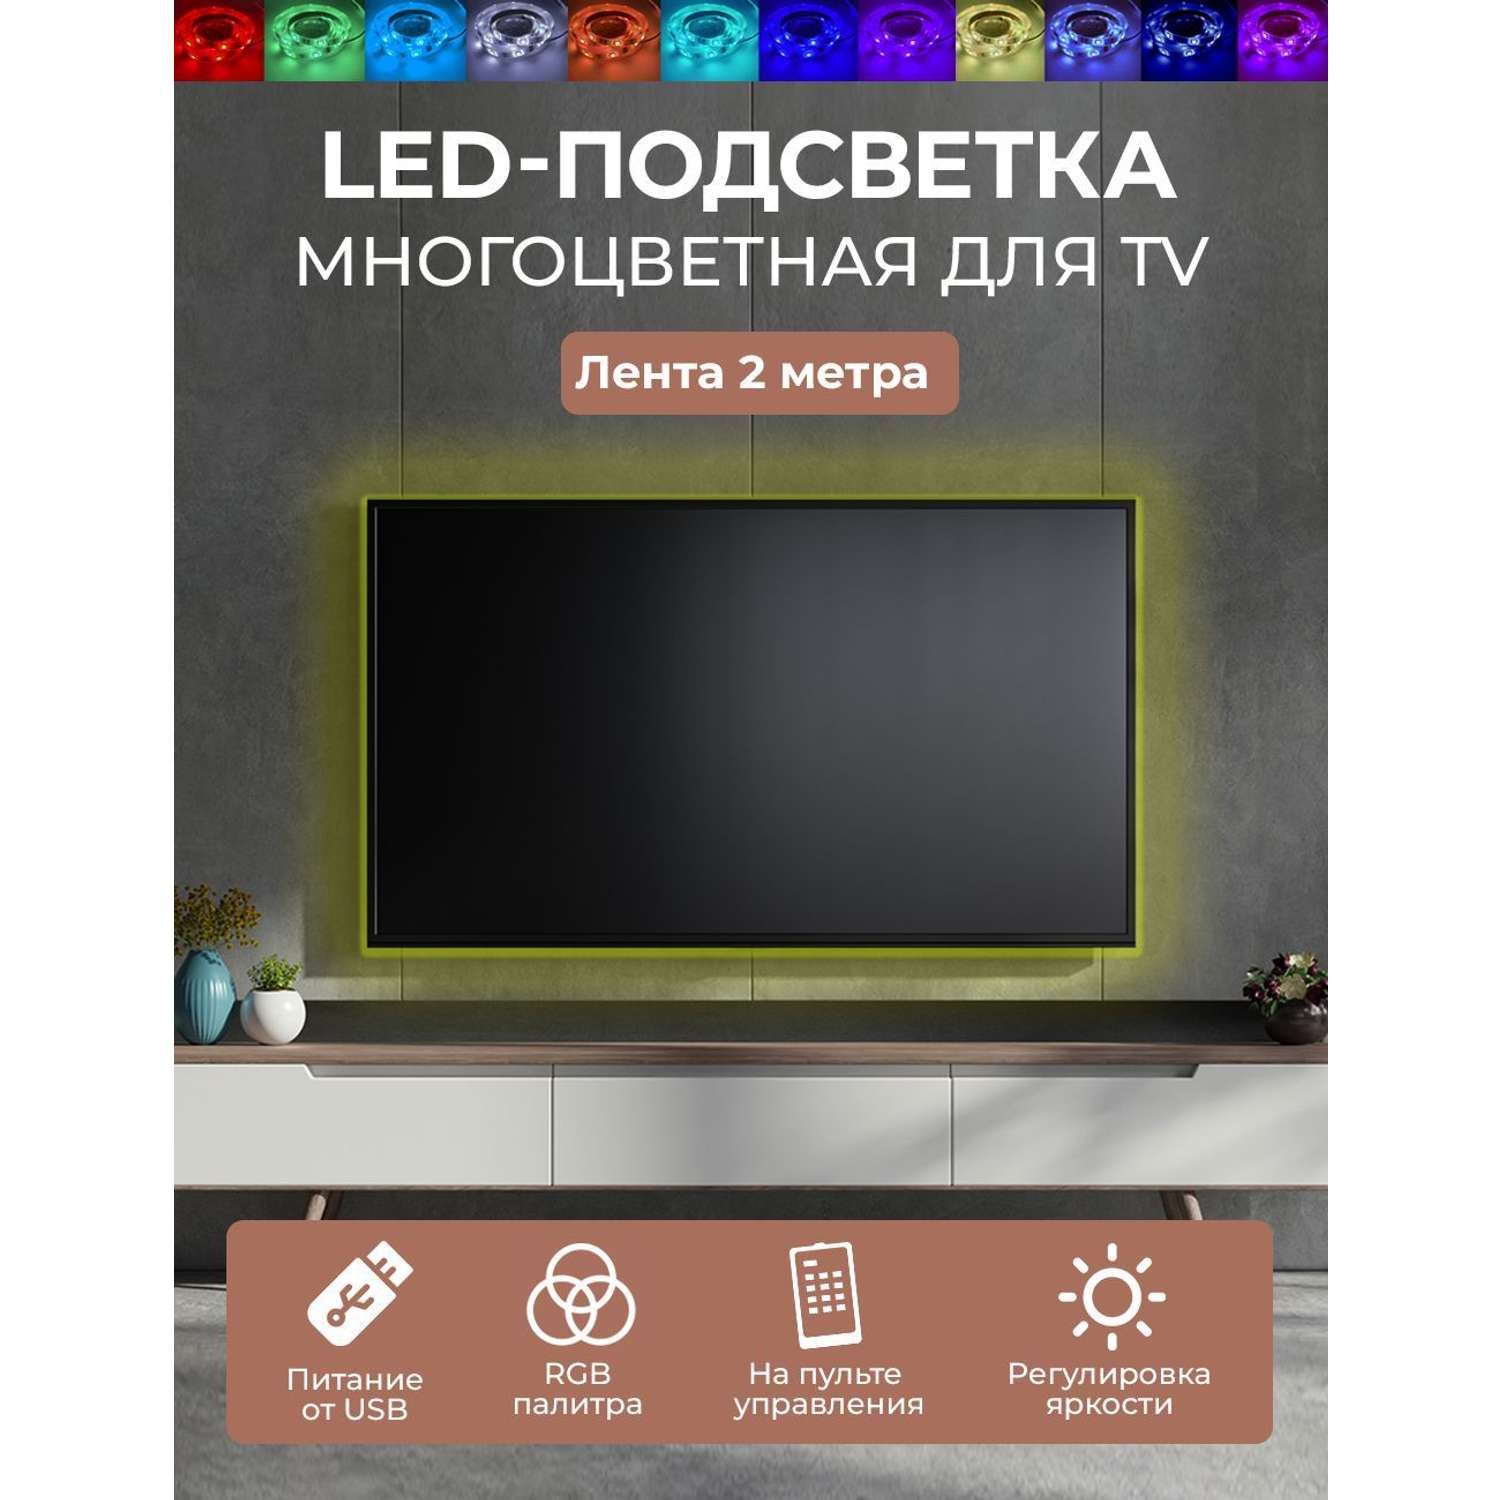 Цветная светодиодная LED лента ГЕЛЕОС для телевизора монитора экрана 2 метра с пультом управления T12 4 8Вт/5V USB длина 200 см - фото 2